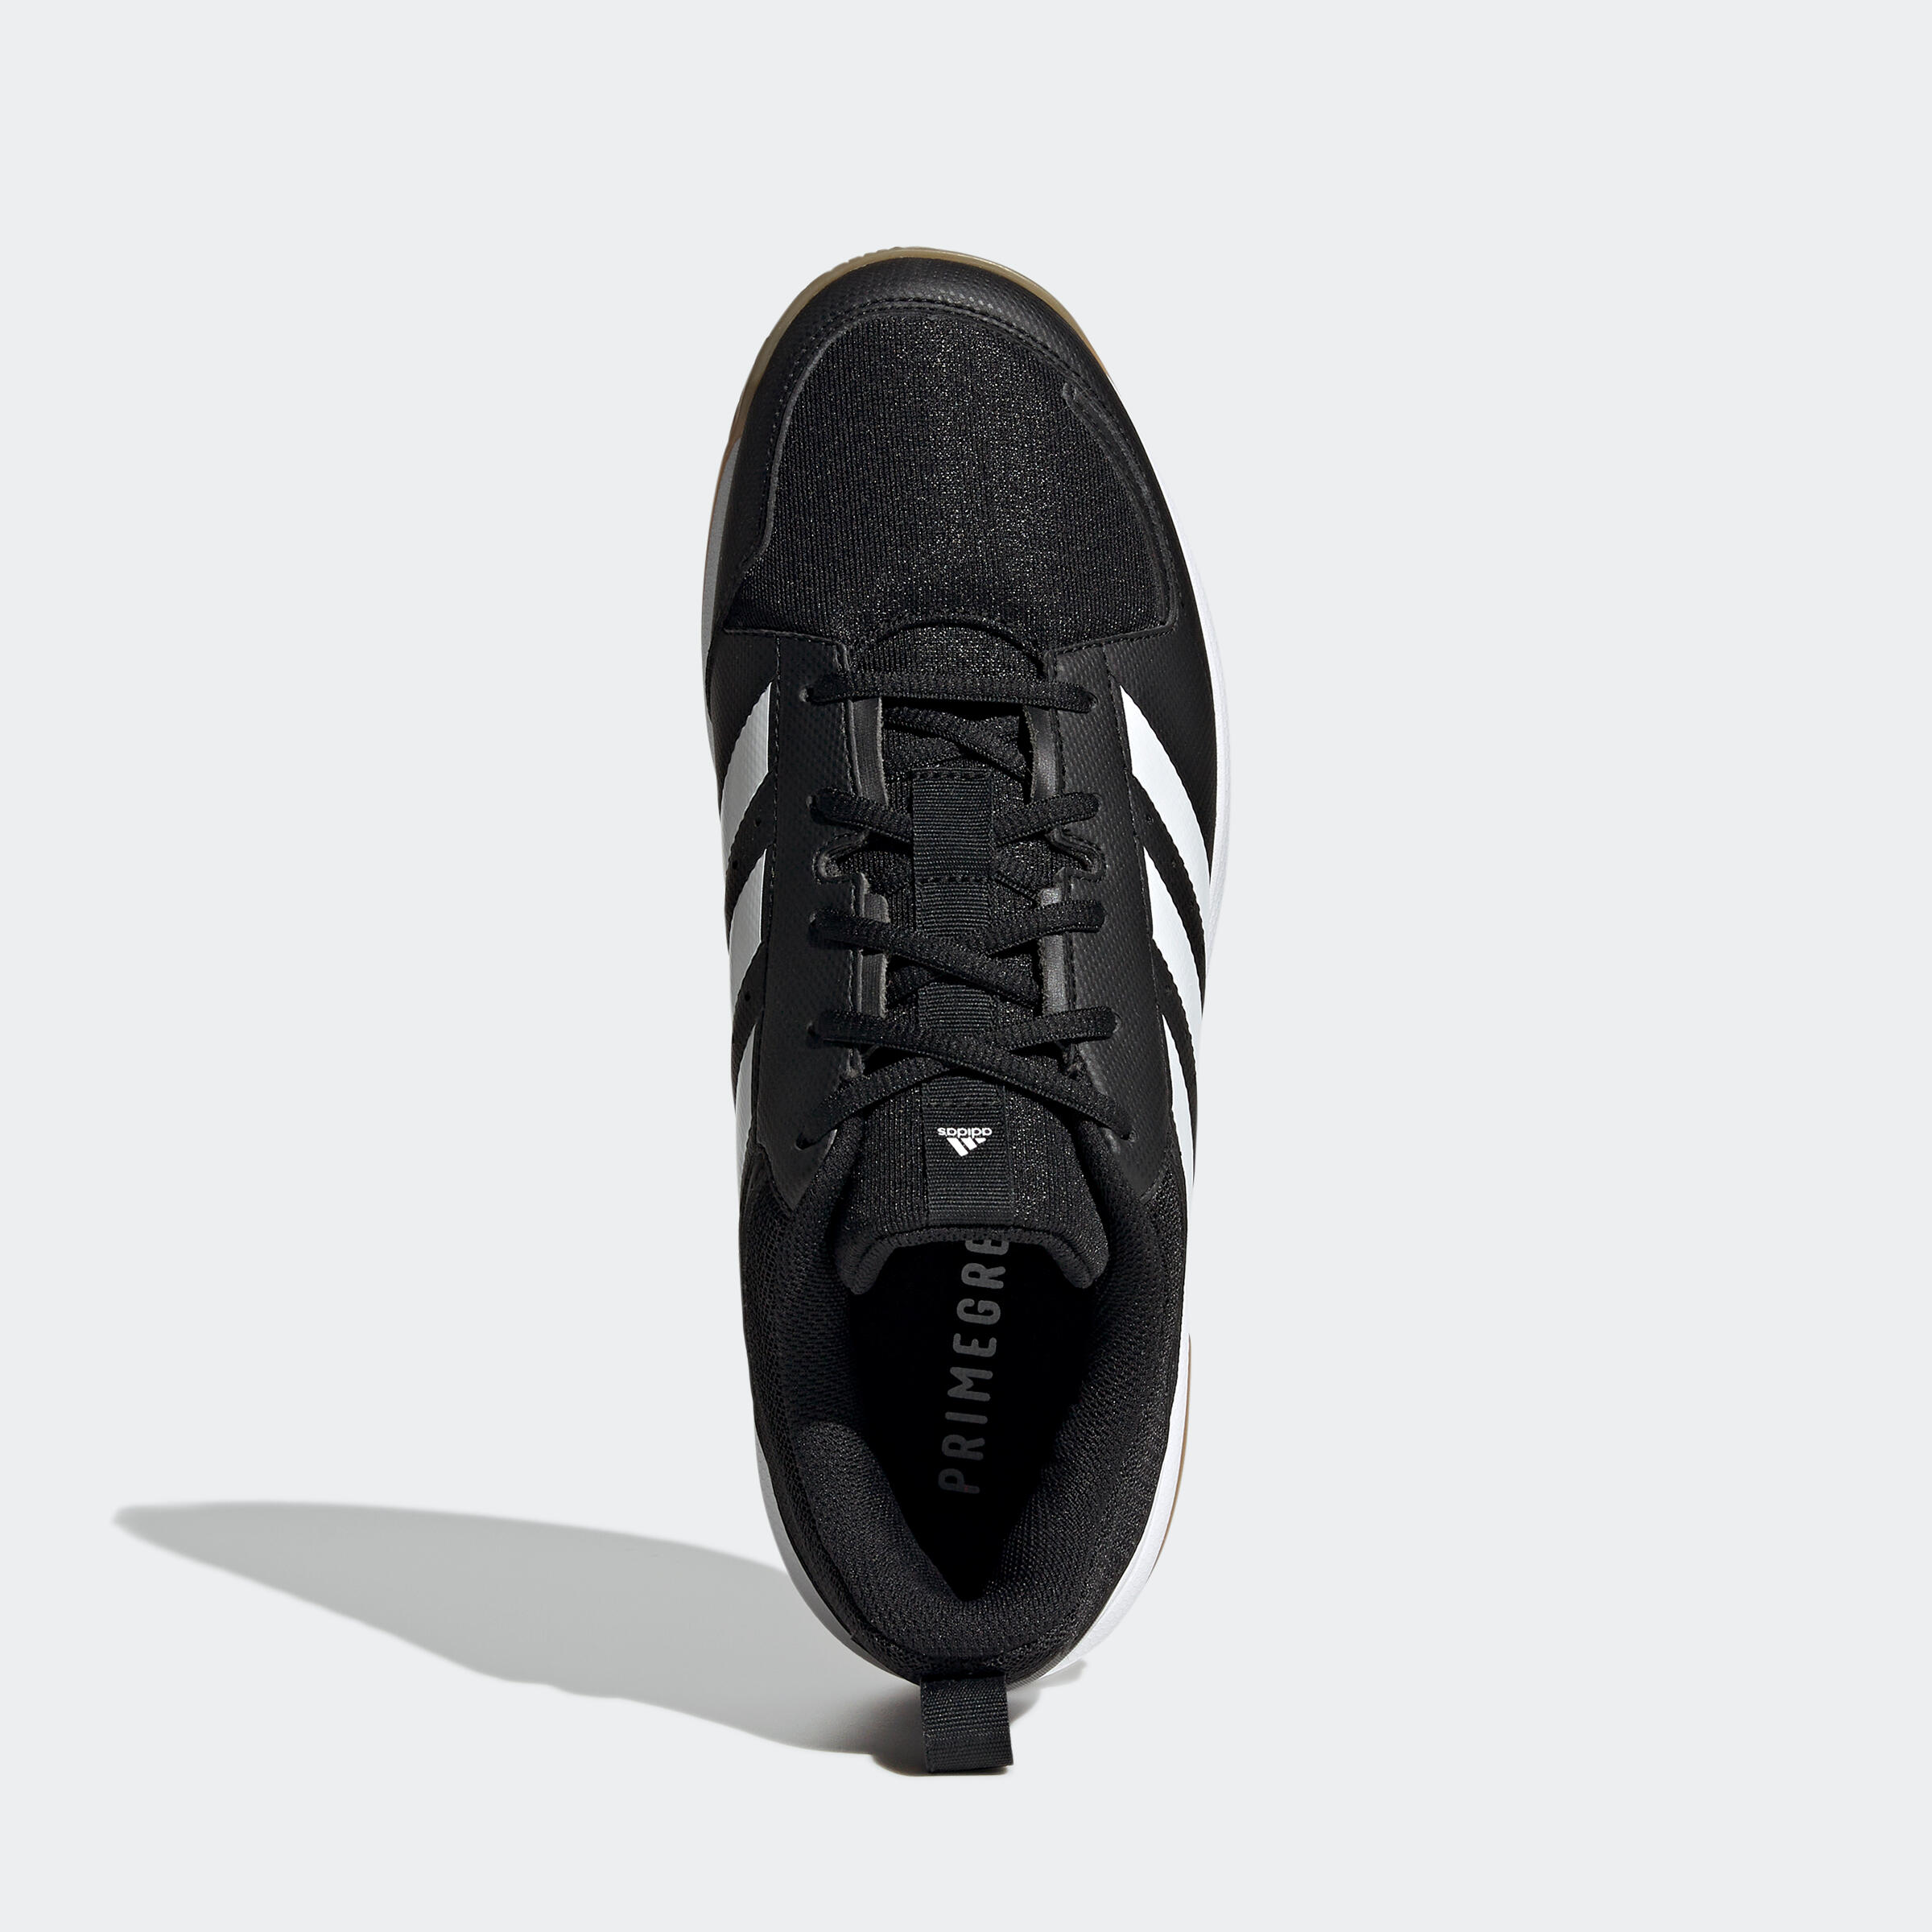 Adult Handball Shoes Ligra - Black 8/10